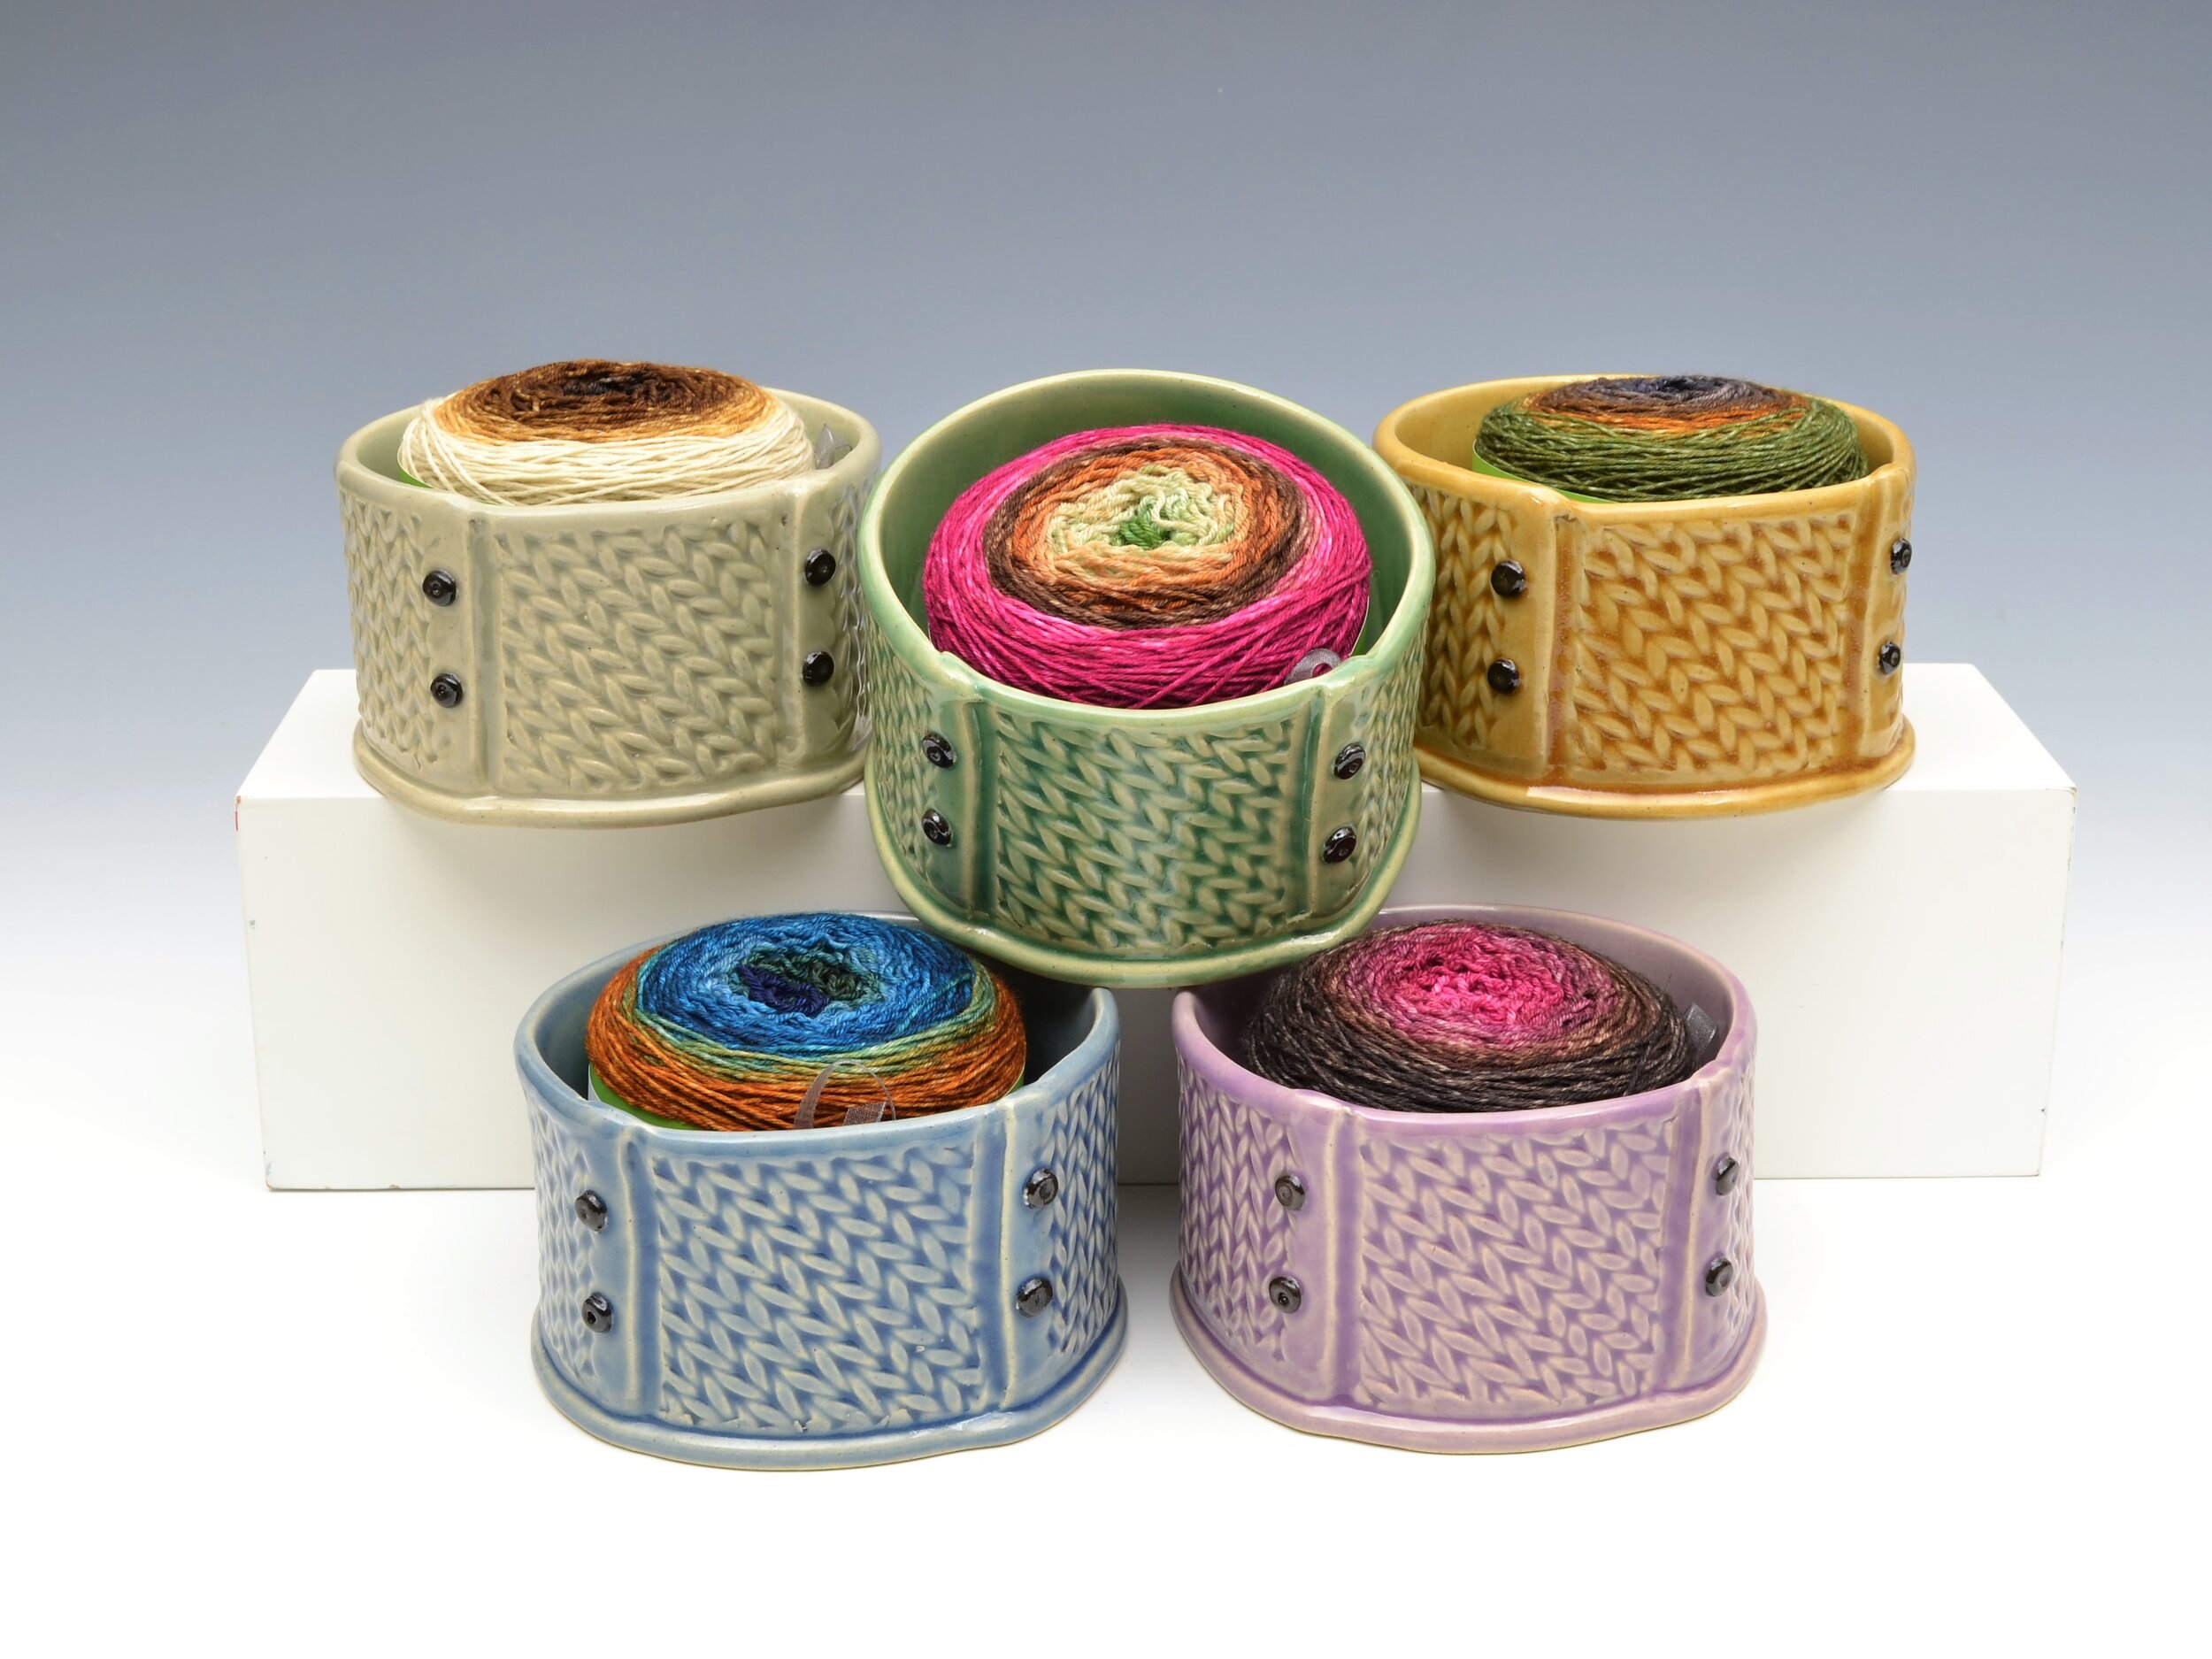 Round Crochet Bowl, Yarn Bowl, For Crocheting For DIY Knitting 